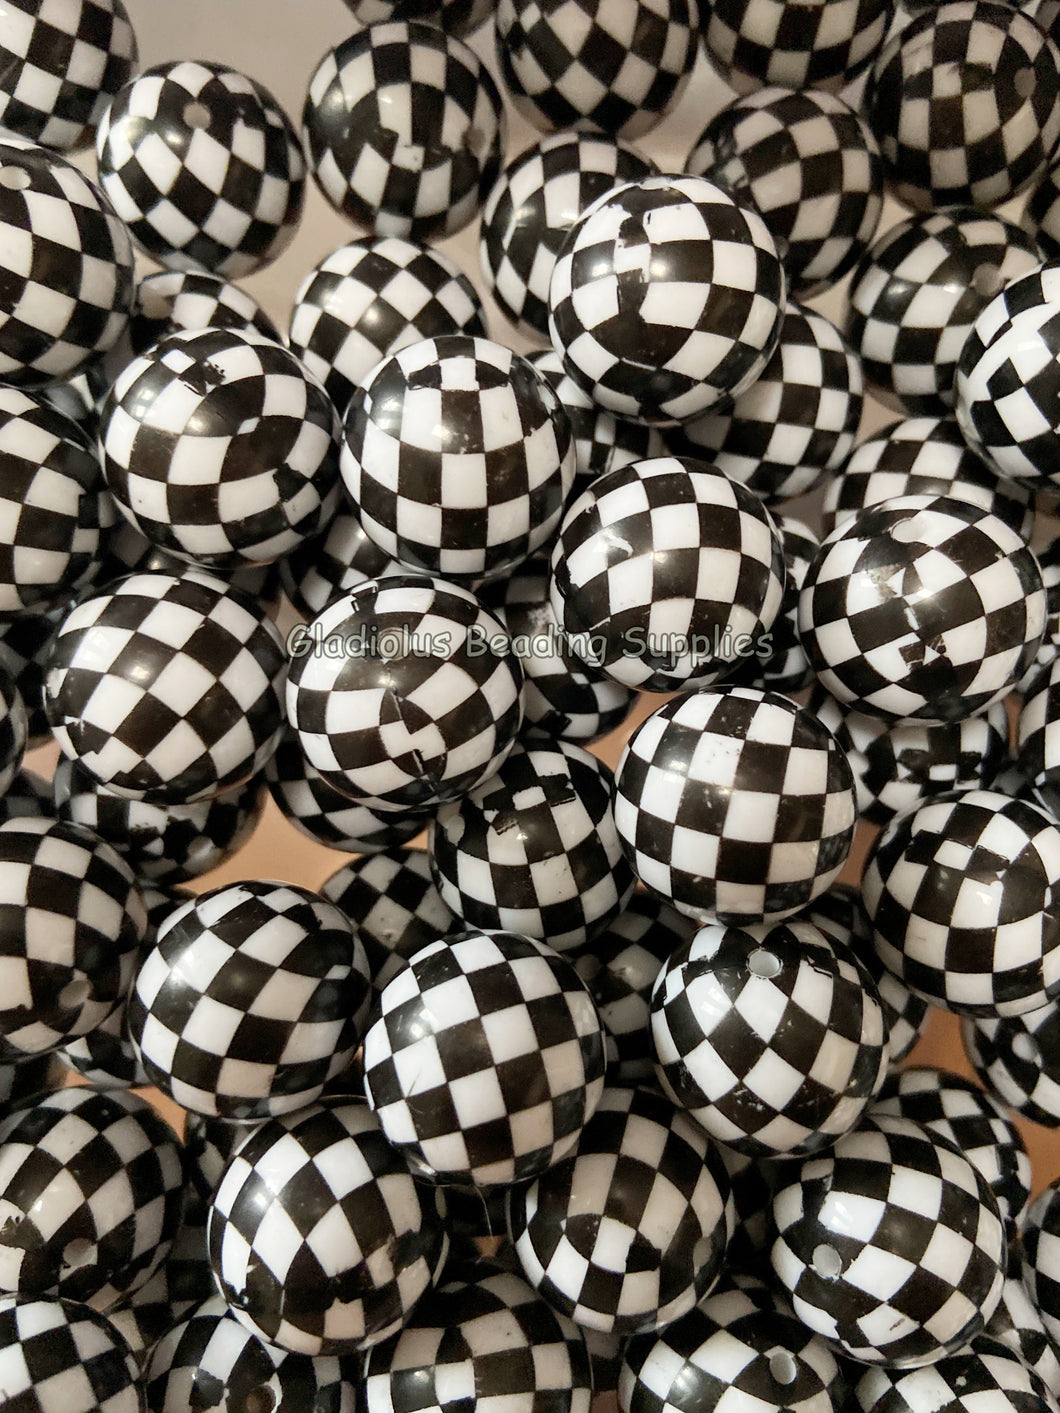 20mm Black and white striped bubblegum beads